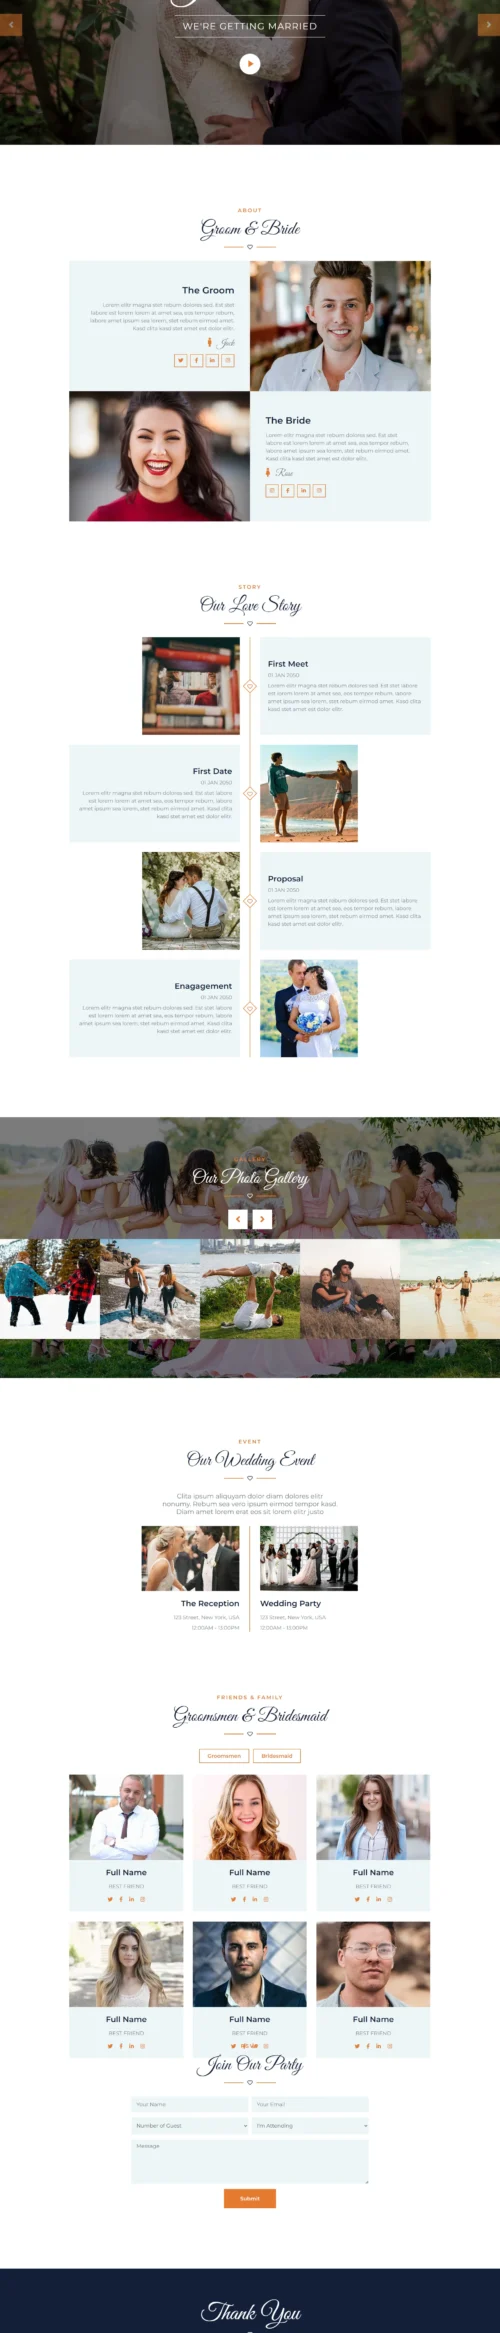 Free Wedding digitizer sol WordPress Themes